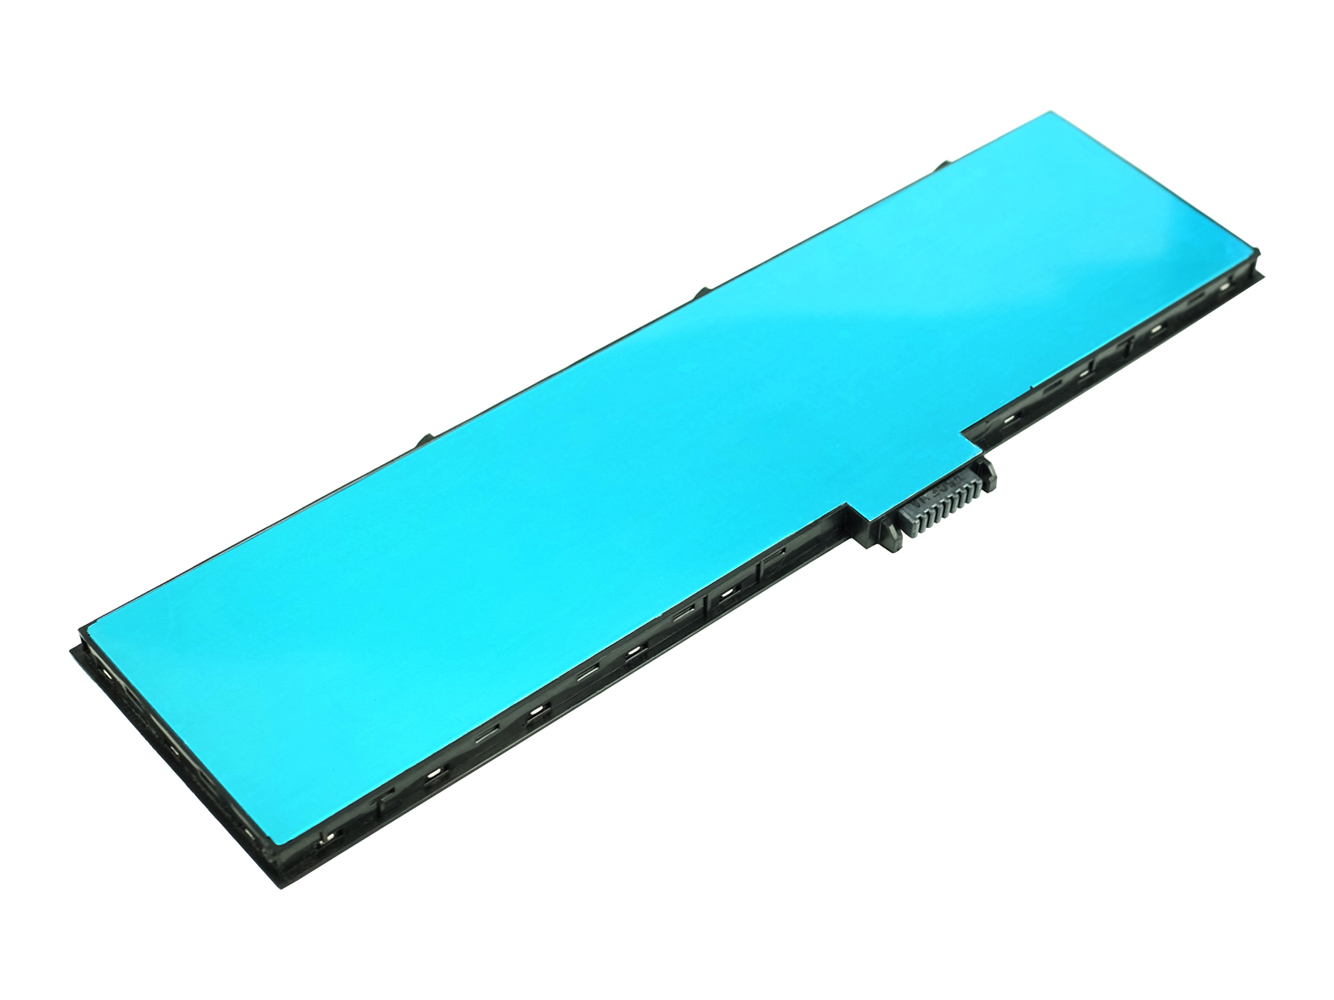 0VT26R, 451-BBGR replacement Laptop Battery for Dell Venue 11 Pro 7130 Tablet, 7.40V